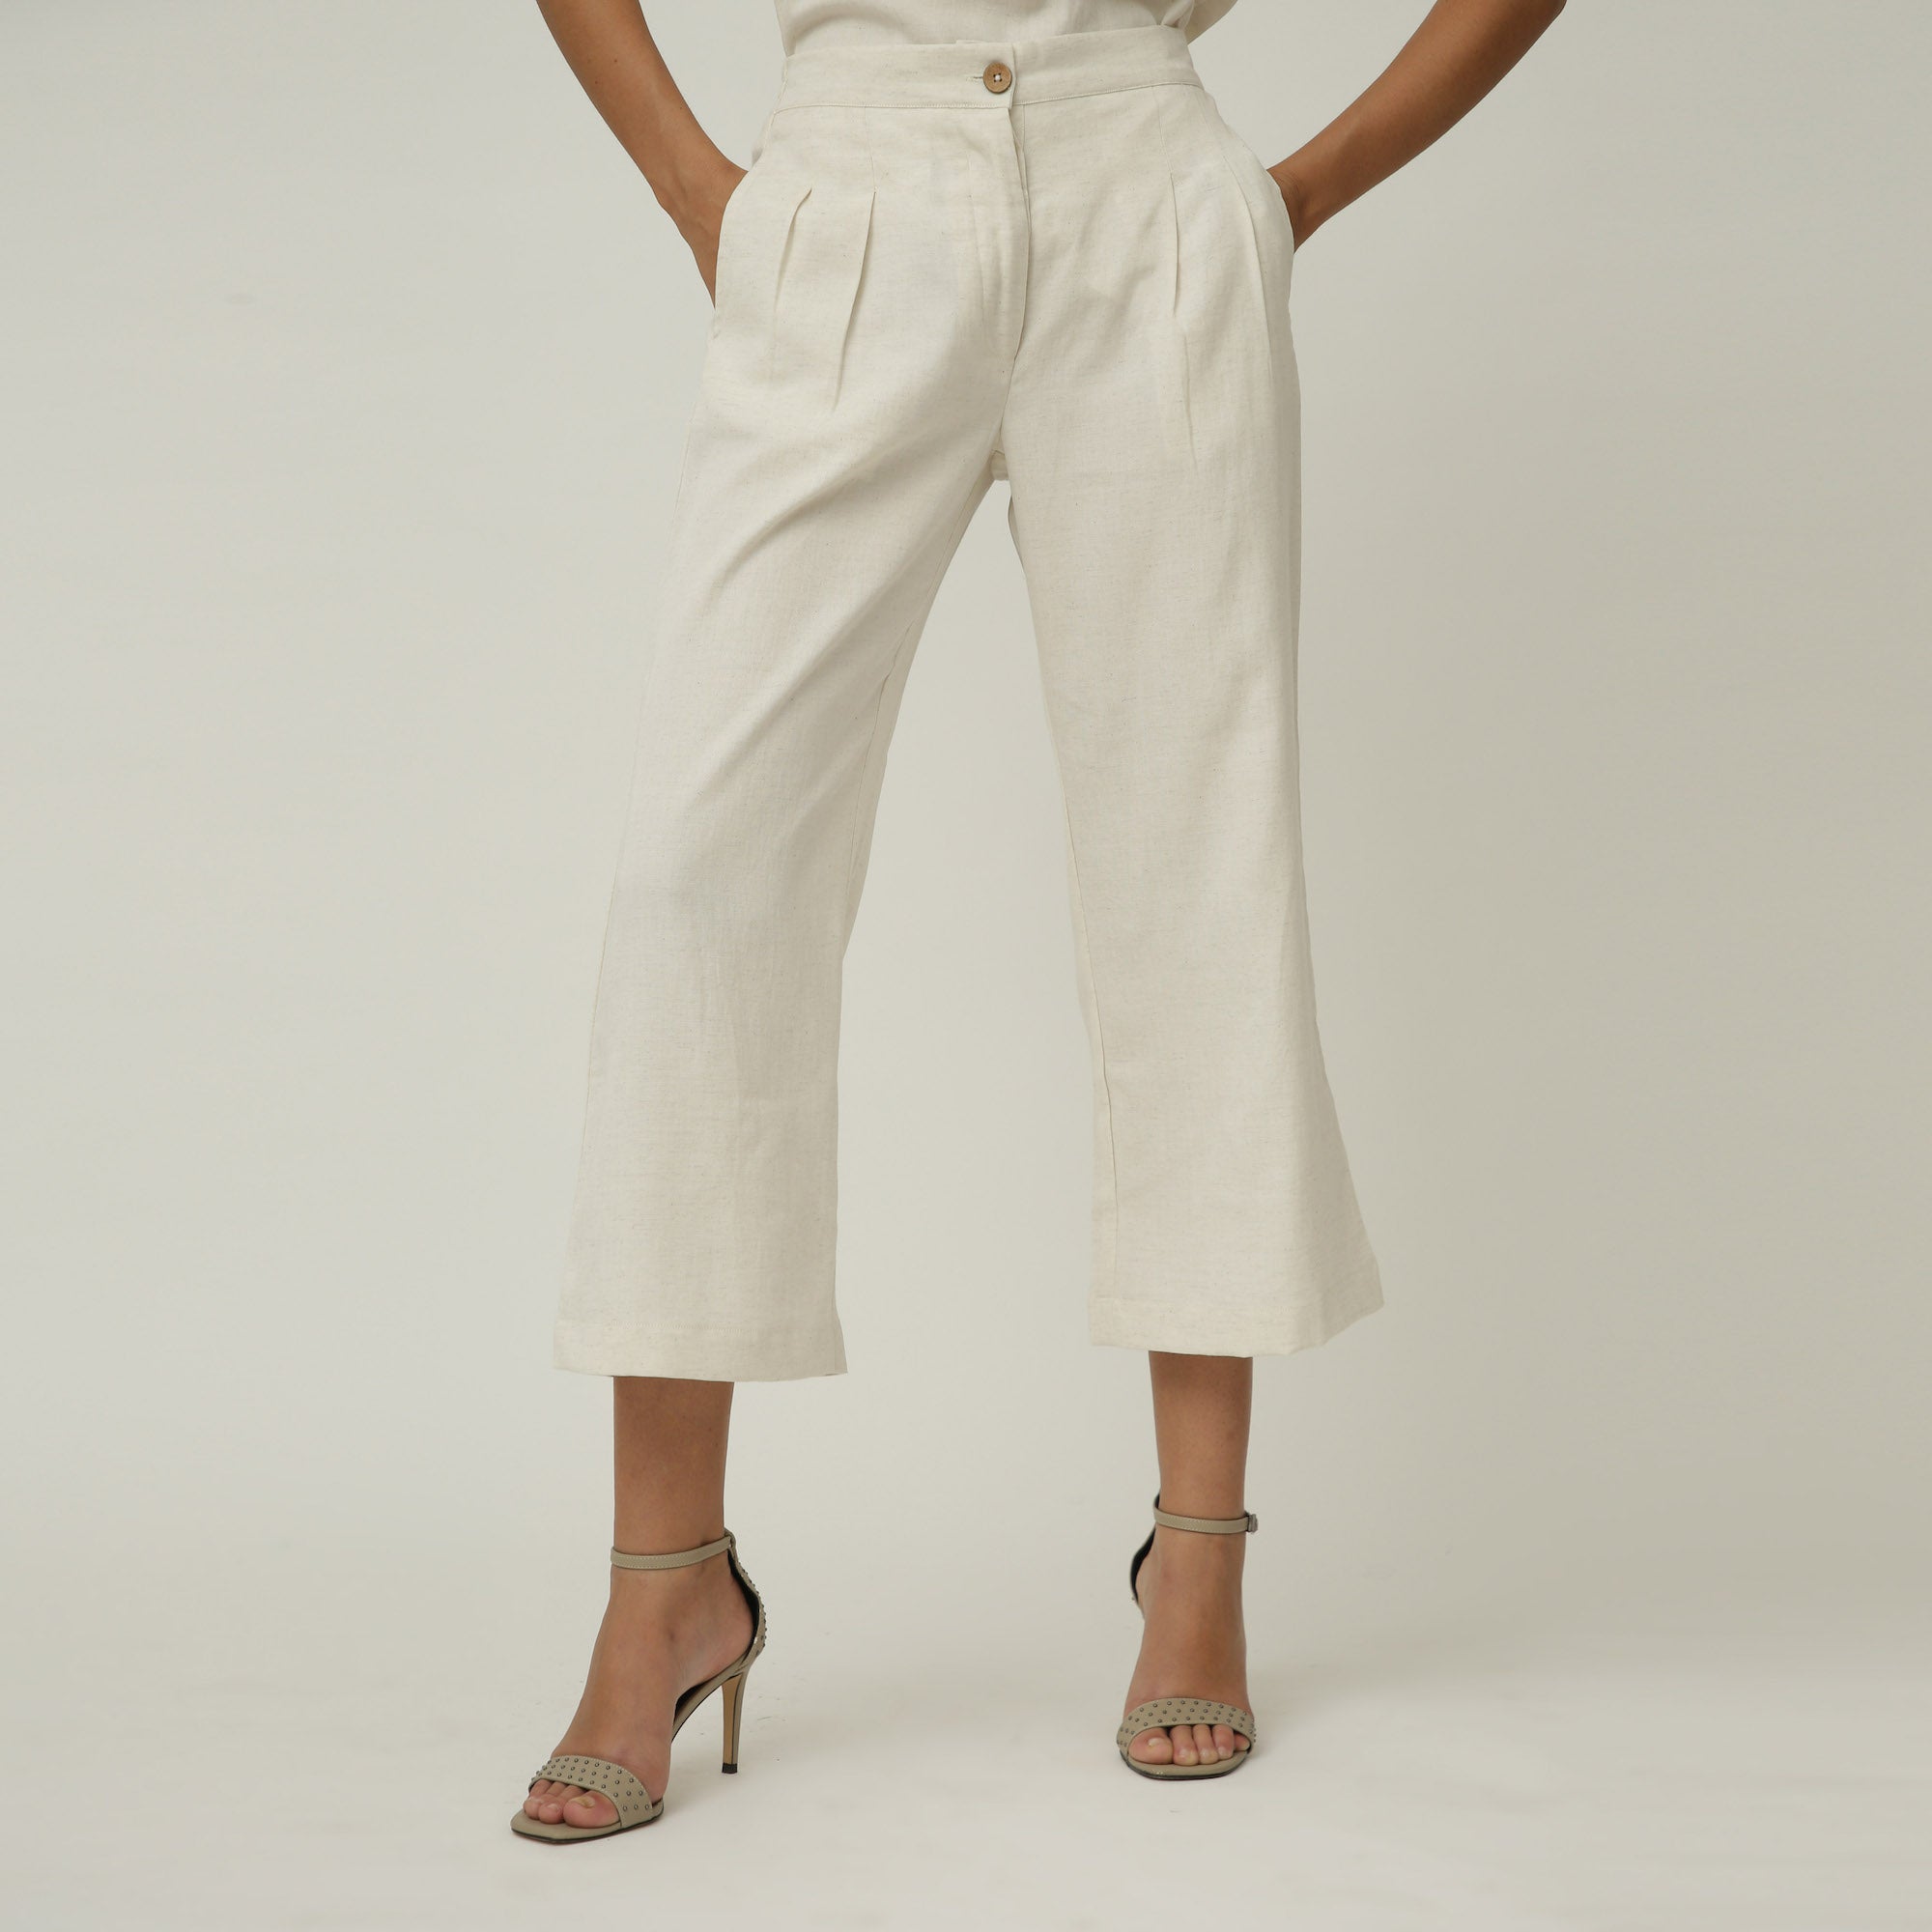 Florence Set of 3 - Long Shirt Overlay, Slip Top & Pants - White & Powder Blue